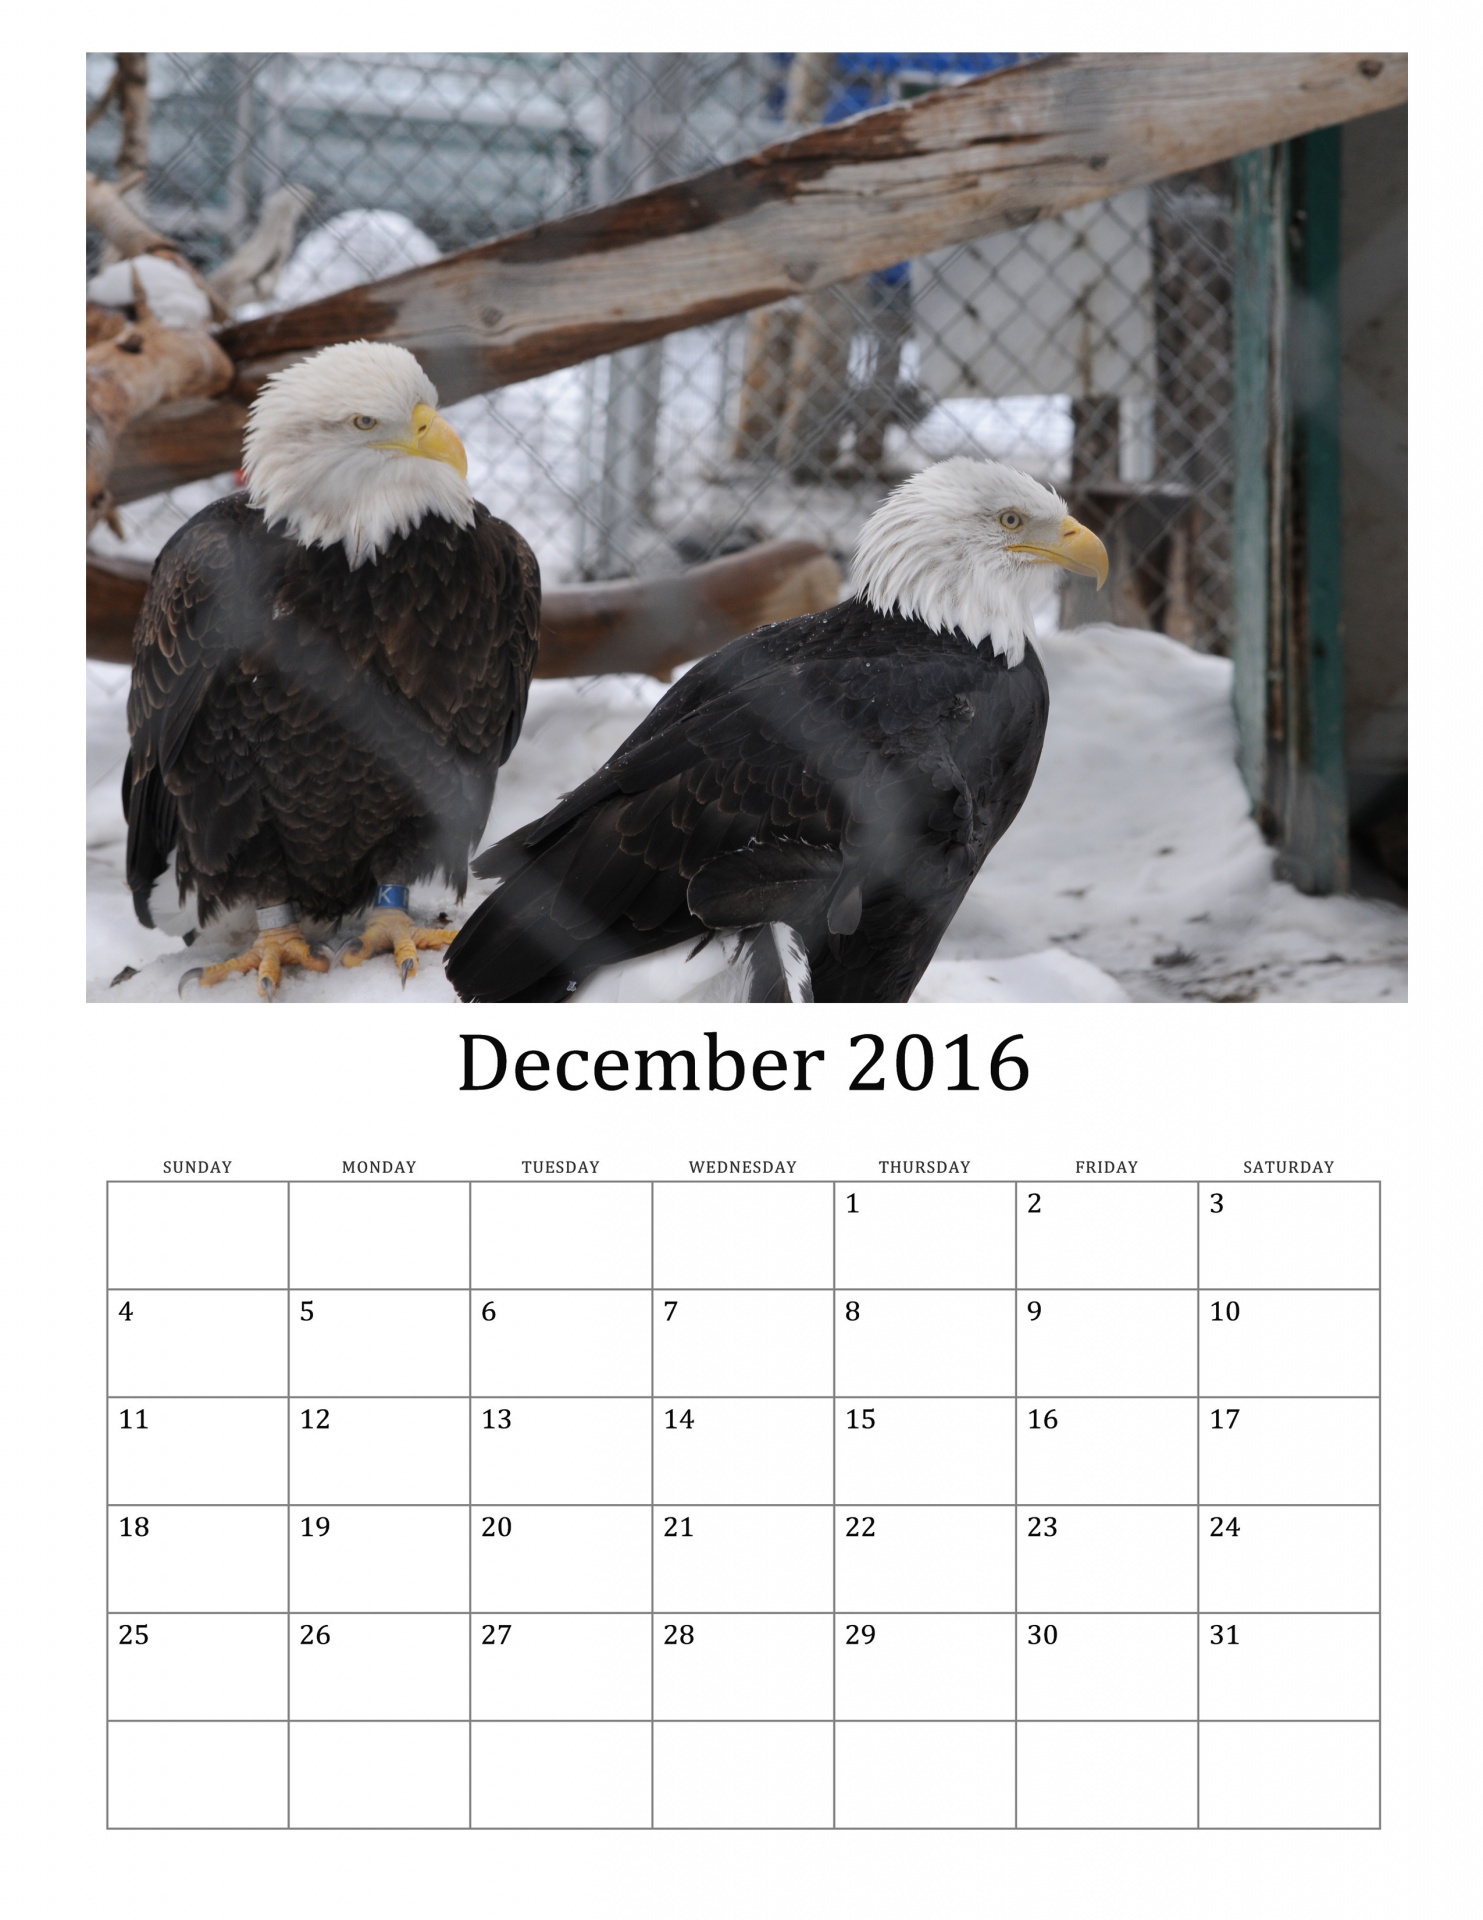 december-2016-calendar-of-birds-free-stock-photo-public-domain-pictures